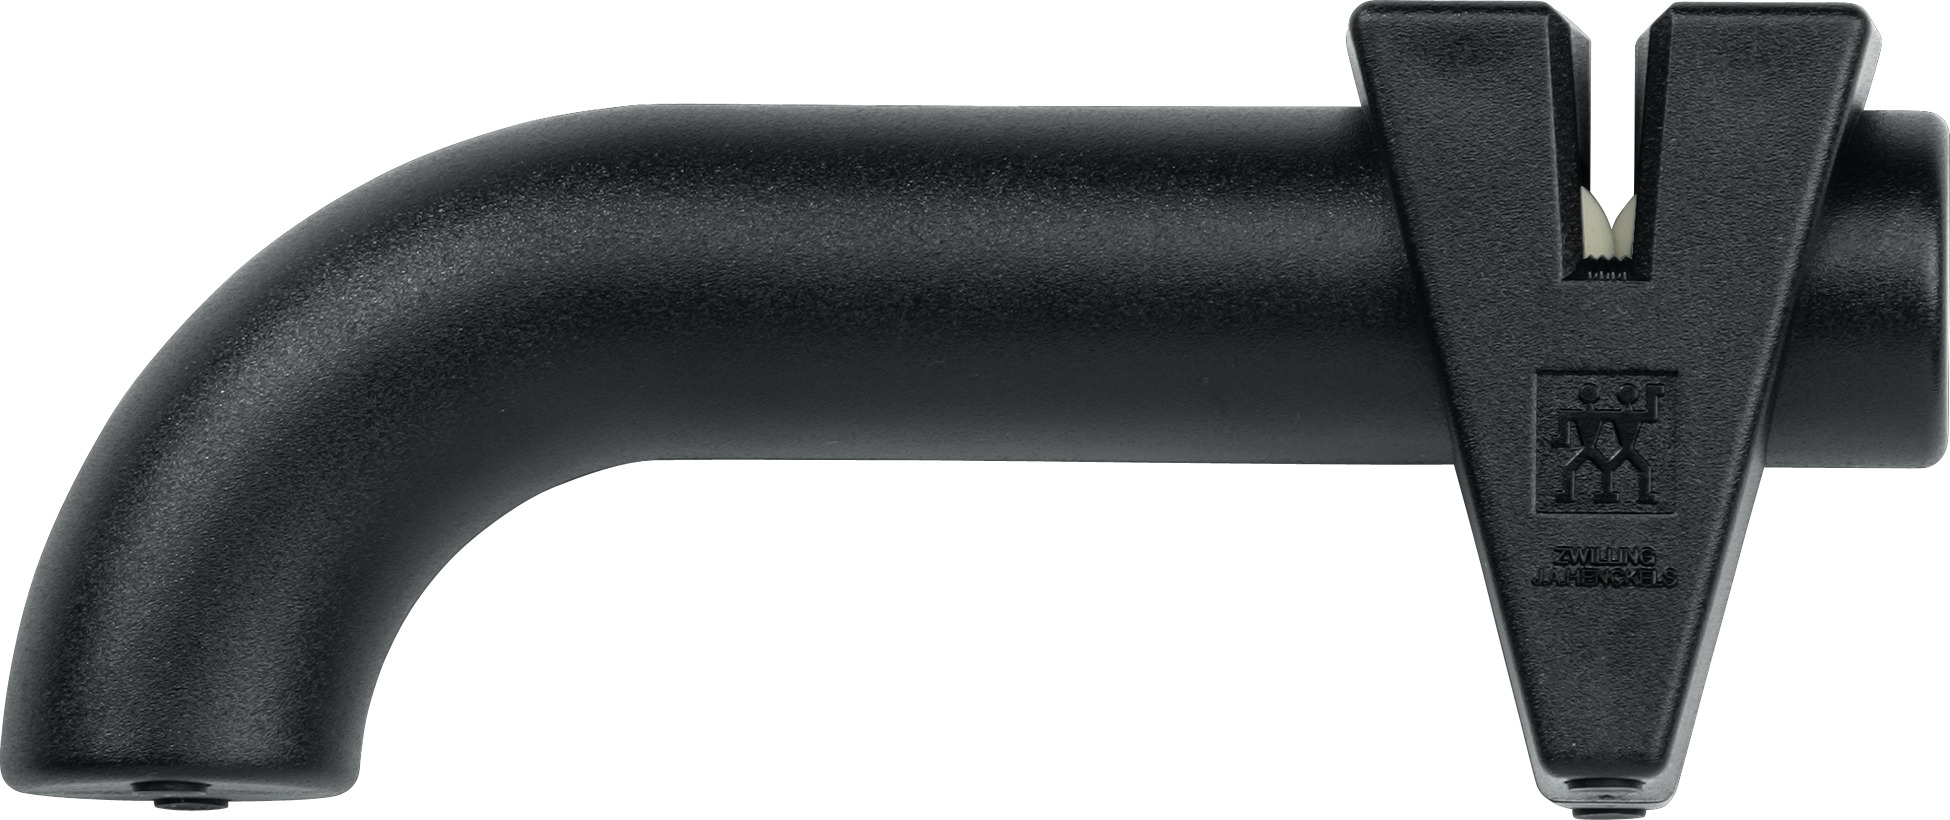 Zwilling TWINSHARP knife sharpener black, 165 mm